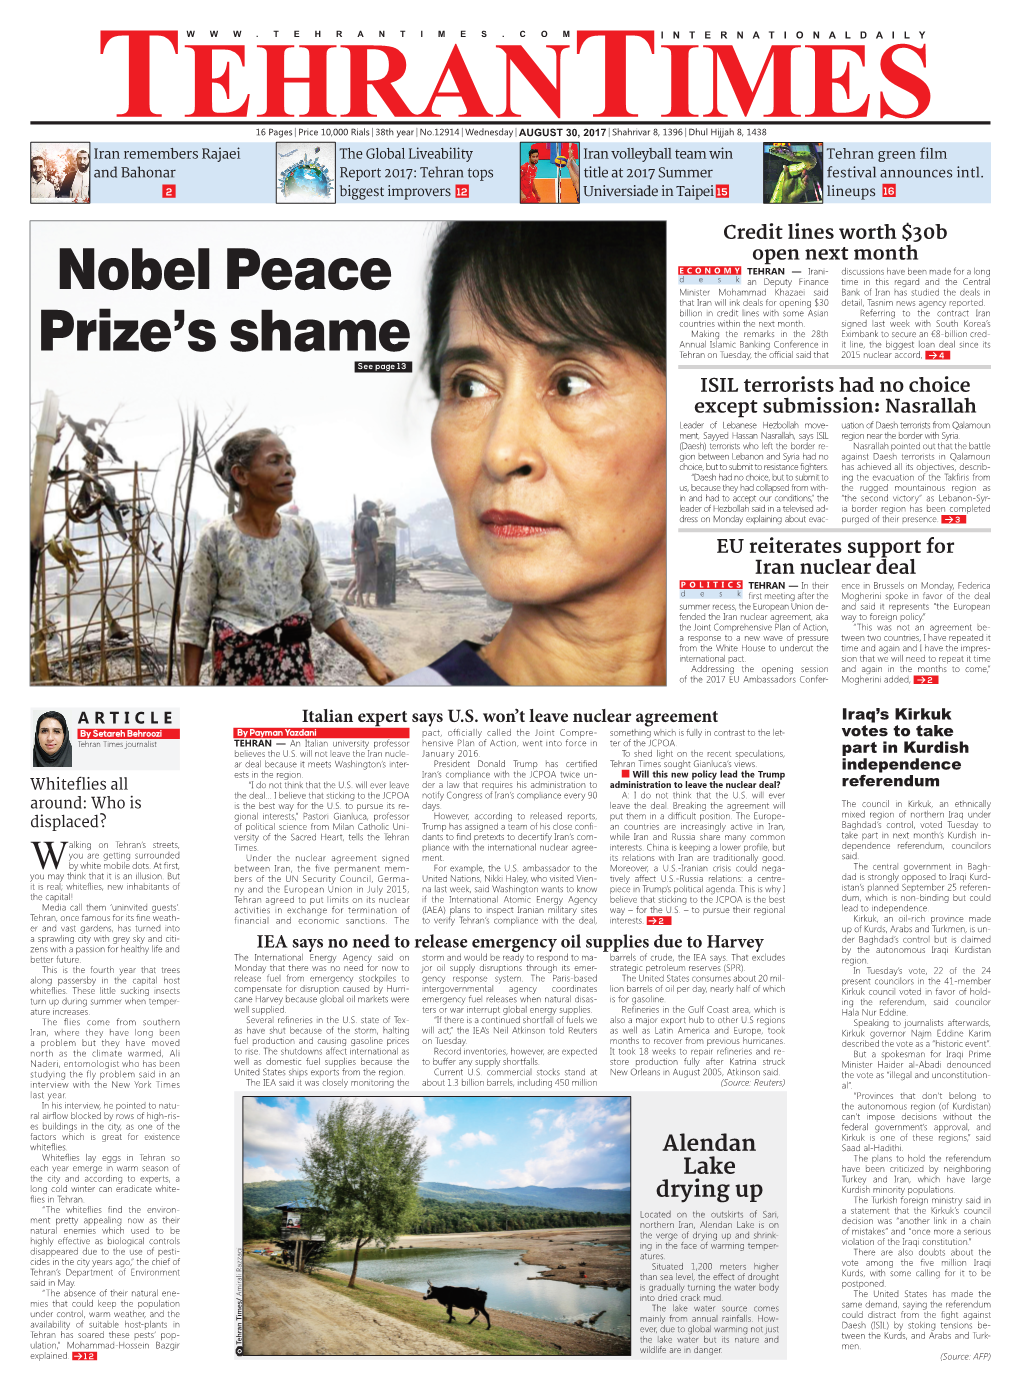 Nobel Peace Prize's Shame